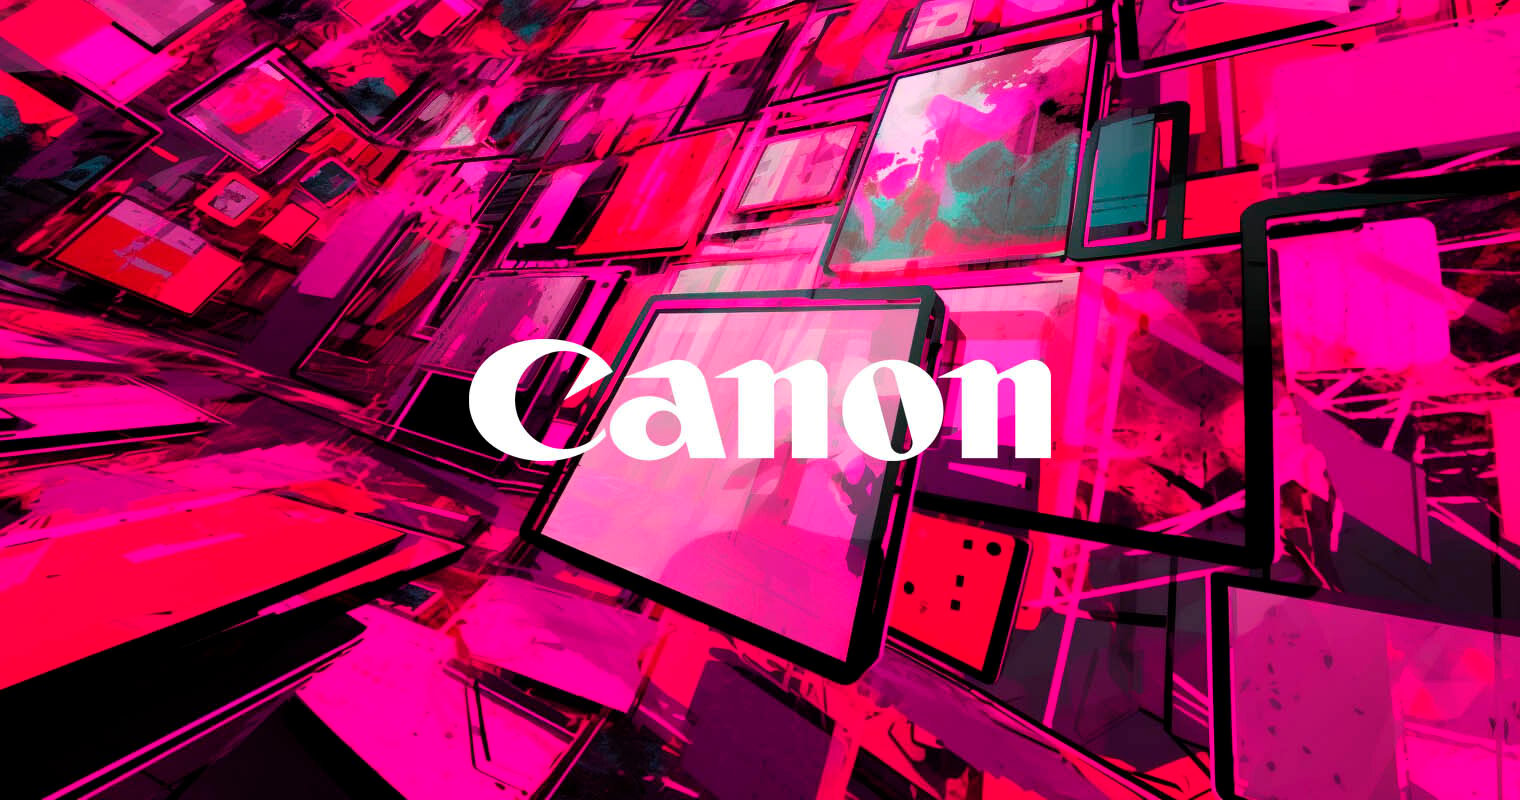 Canon Jumps Into NFTs, Building a Digital Art Market Called Cadabra